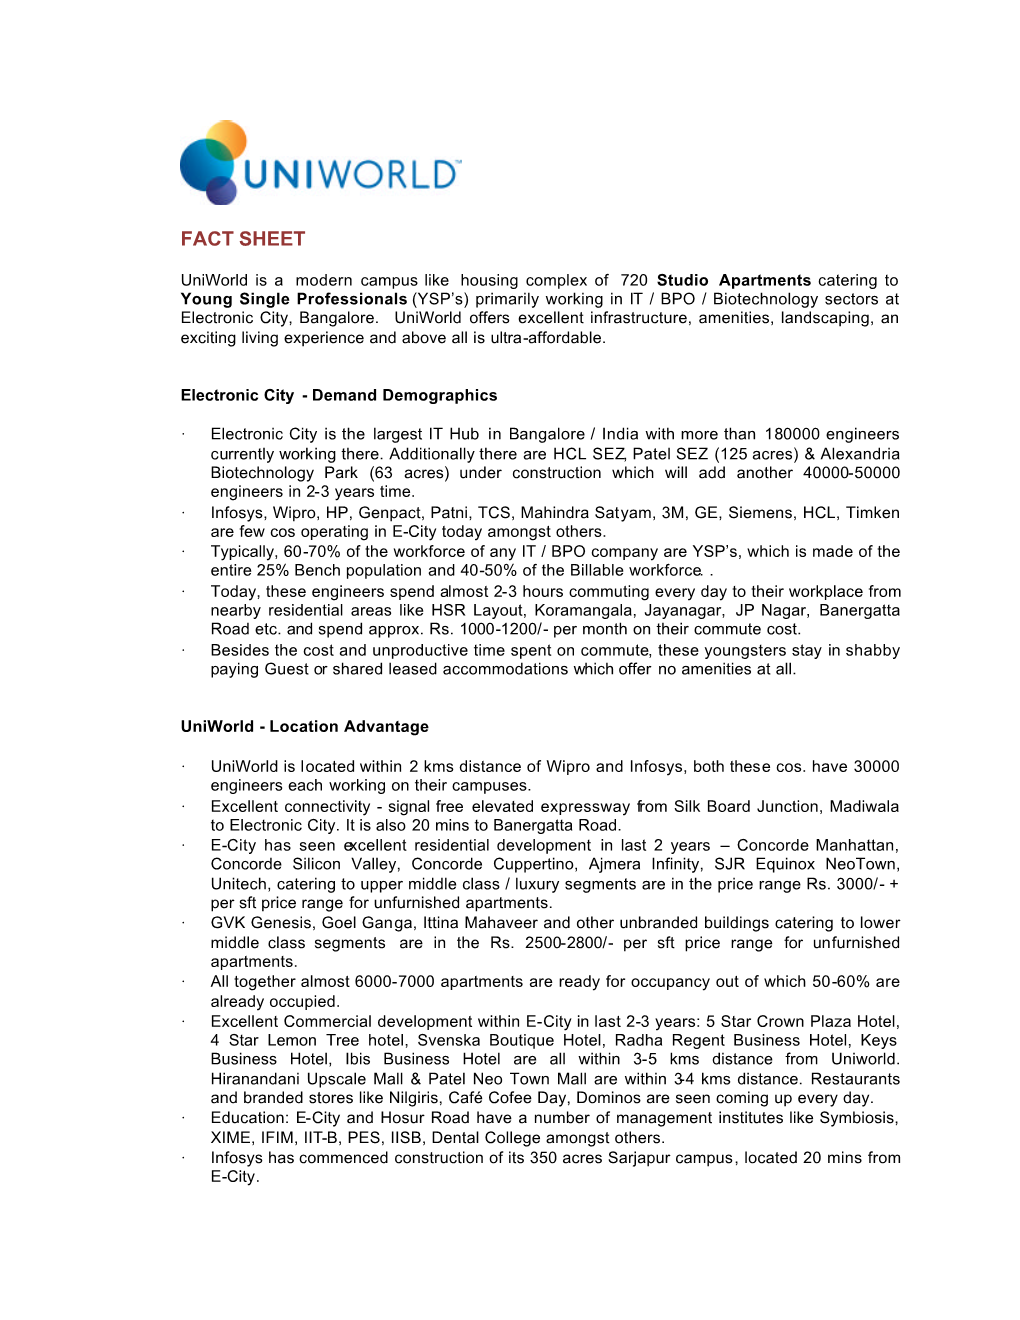 Uniworld Fact Sheet